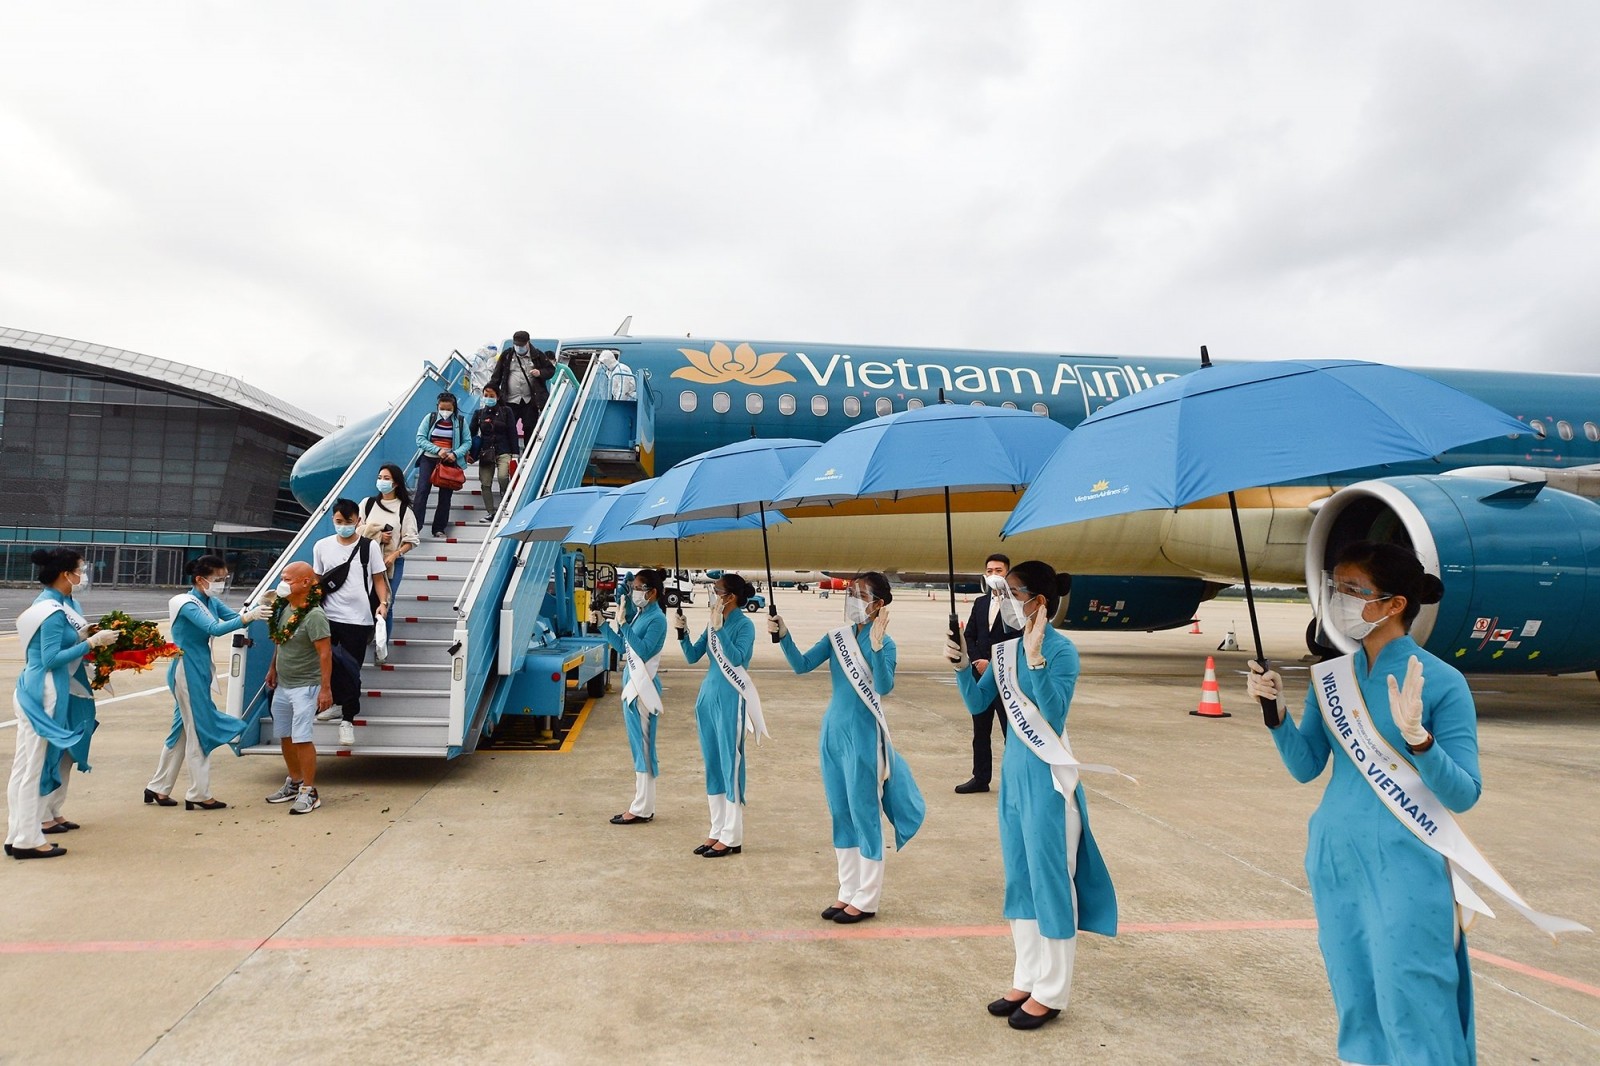 4-vietnam-airlines-khang-dinh-no-luc-dong-hanh-cung-cac-co-quan-chuc-nang-thuc-hien-muc-tieu-du-lich-viet-nam-an-toan-hap-dan-1637219218.jpg